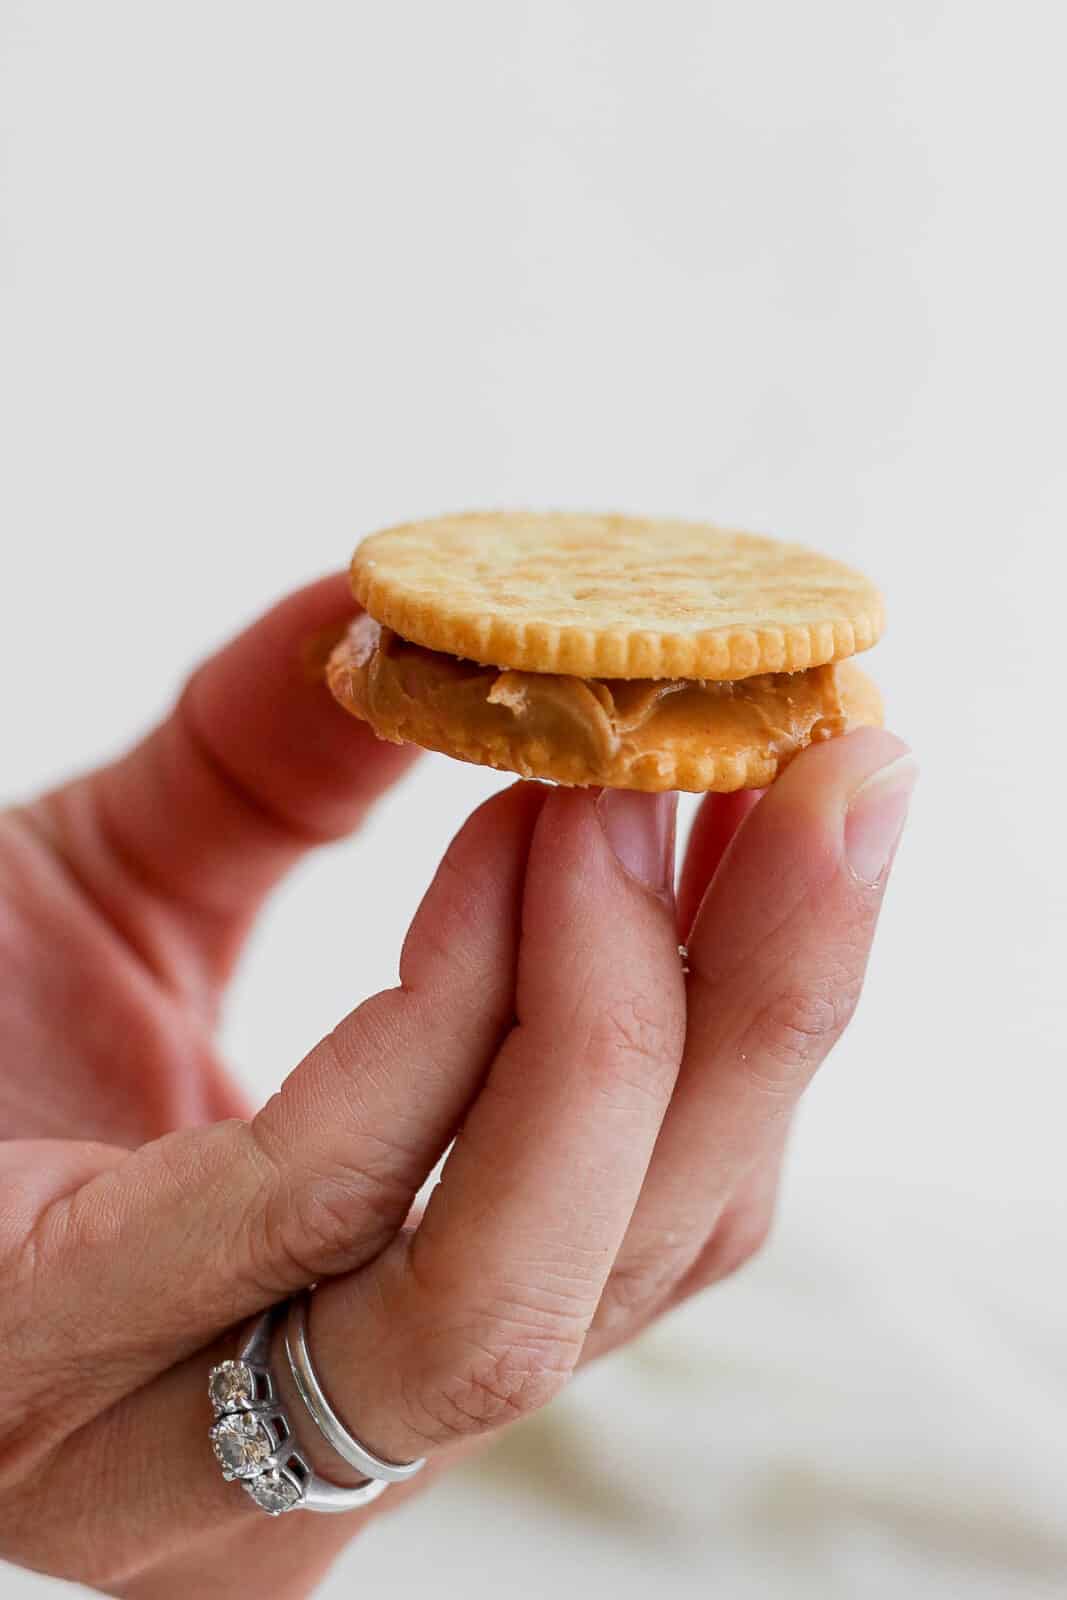 A peanut butter sandwich with ritz crackers. 